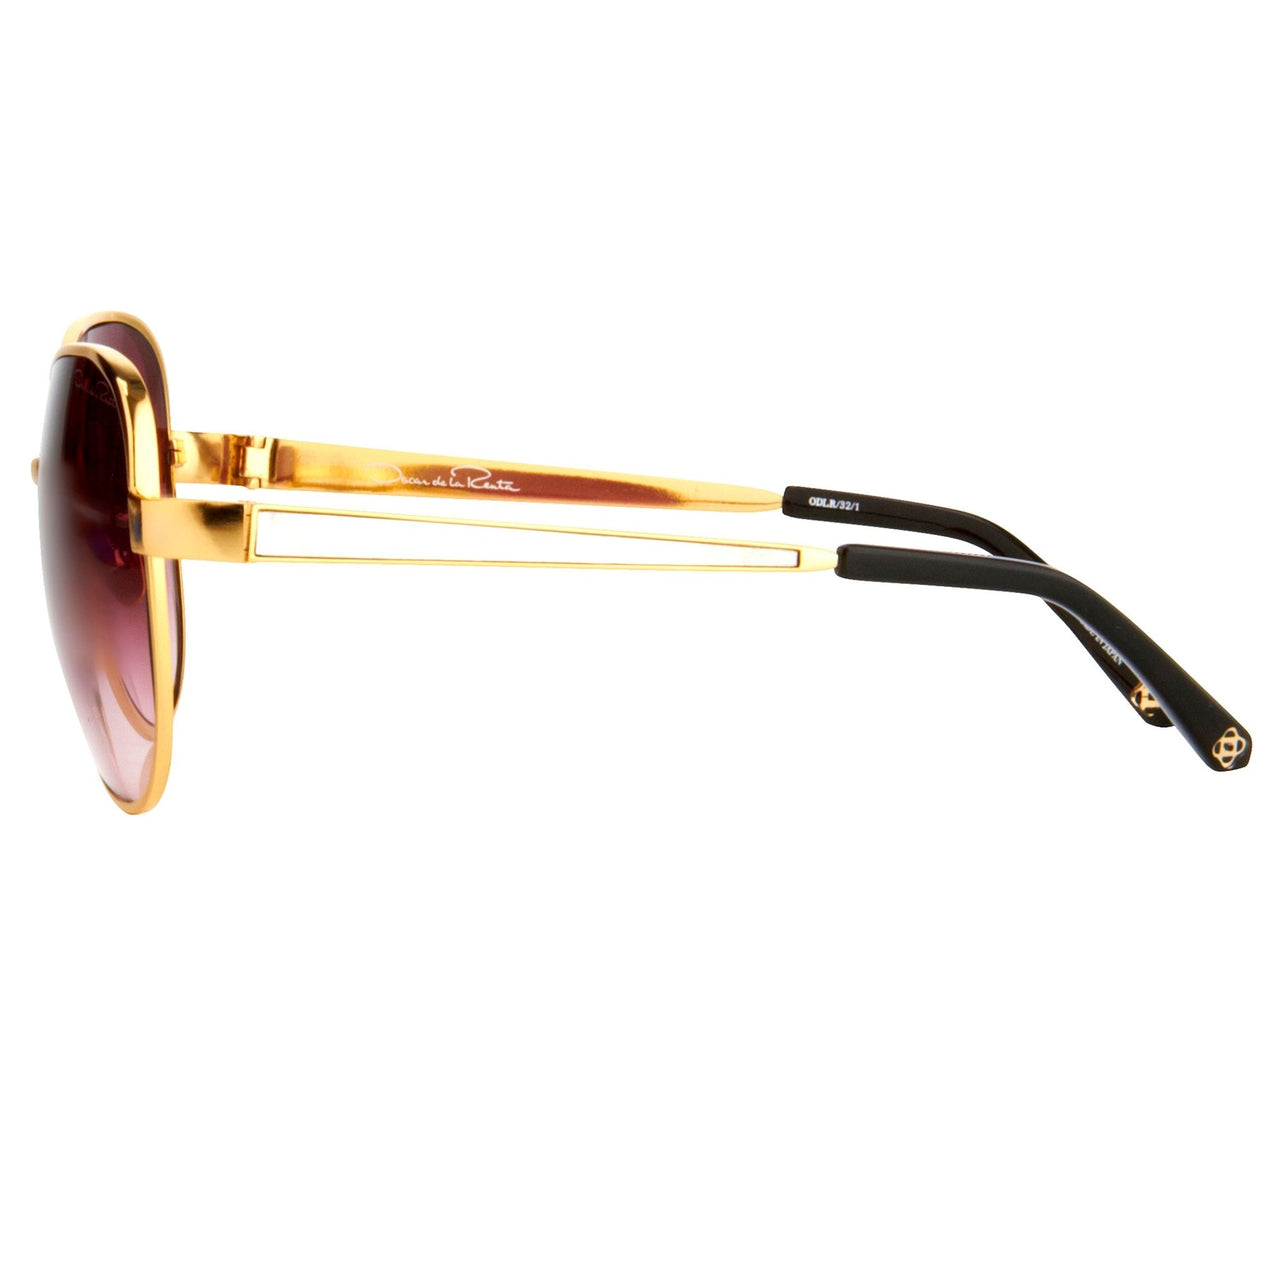 Oscar De La Renta Sunglasses Oversized Frame Gold and Purple Lenses Category 3 - ODLR32C1SUN - Watches & Crystals